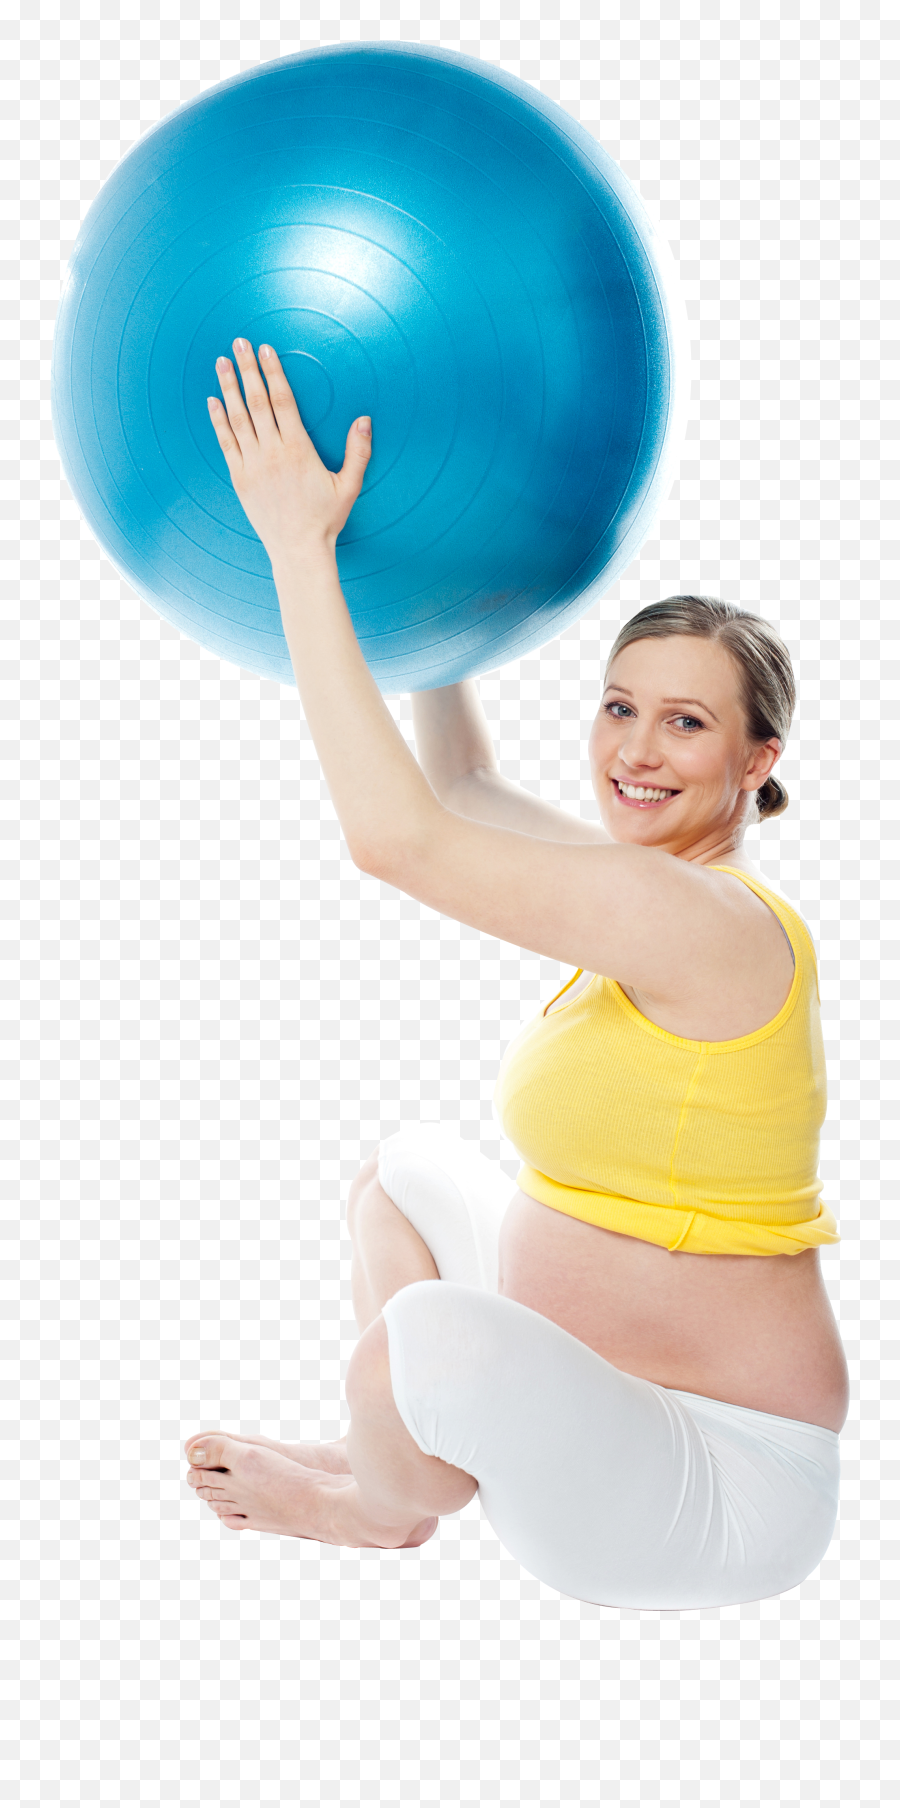 Pregnant Women Png Images Transparent - Portable Network Graphics,Pregnant Png